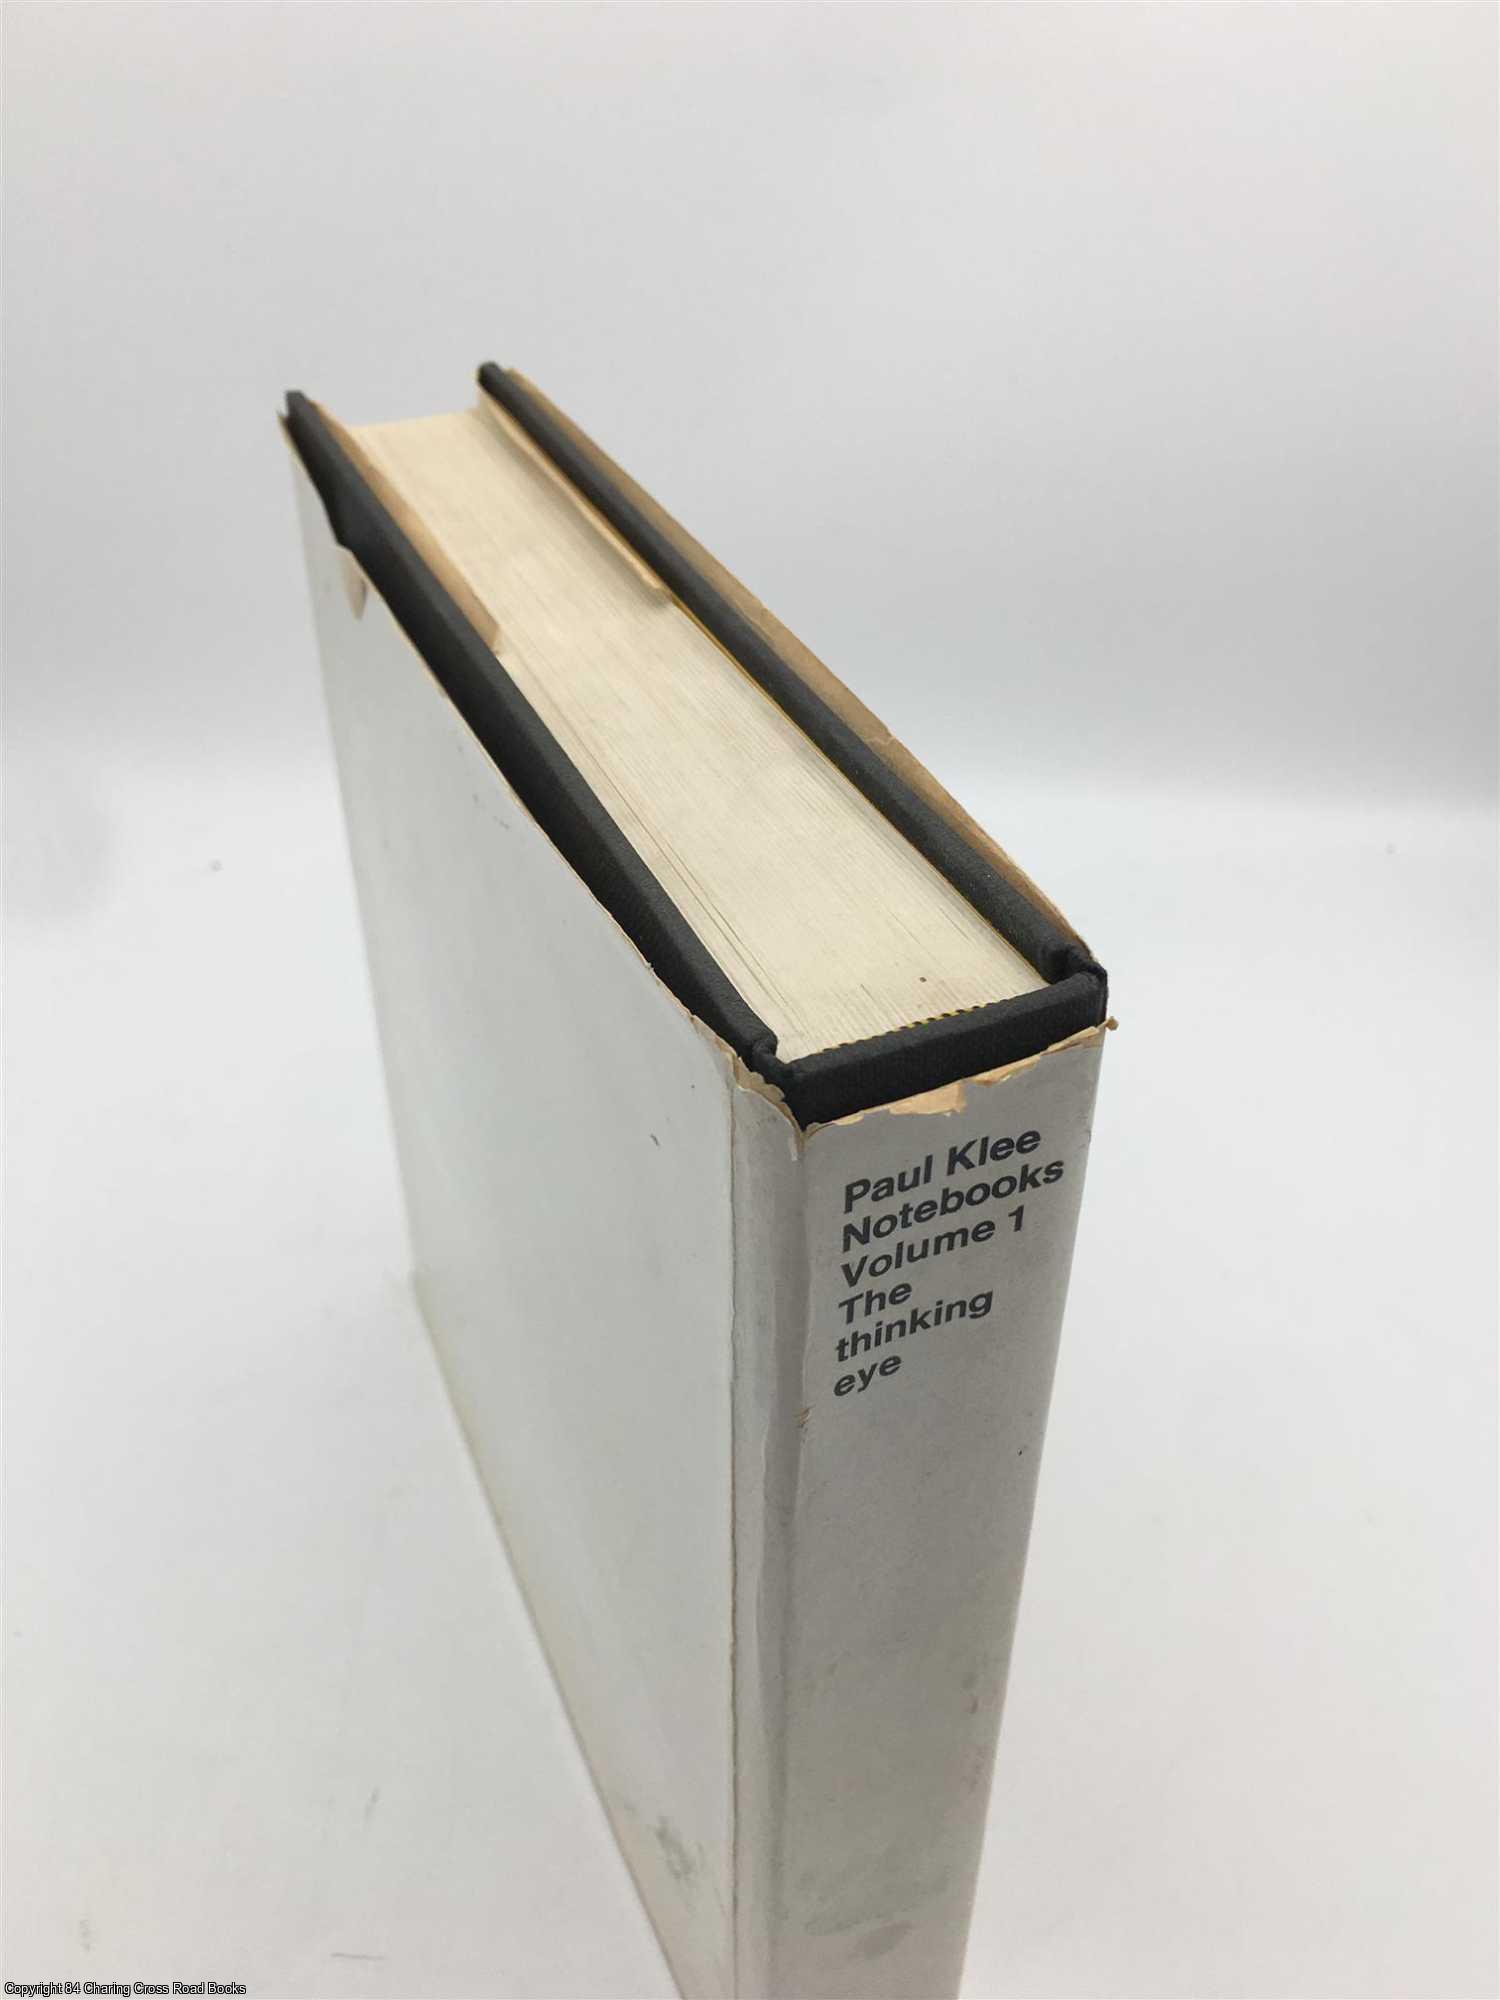 Notebooks: The Thinking Eye vol 1 by Paul Klee, Jurg Spiller on 84 Charing  Cross Rare Books